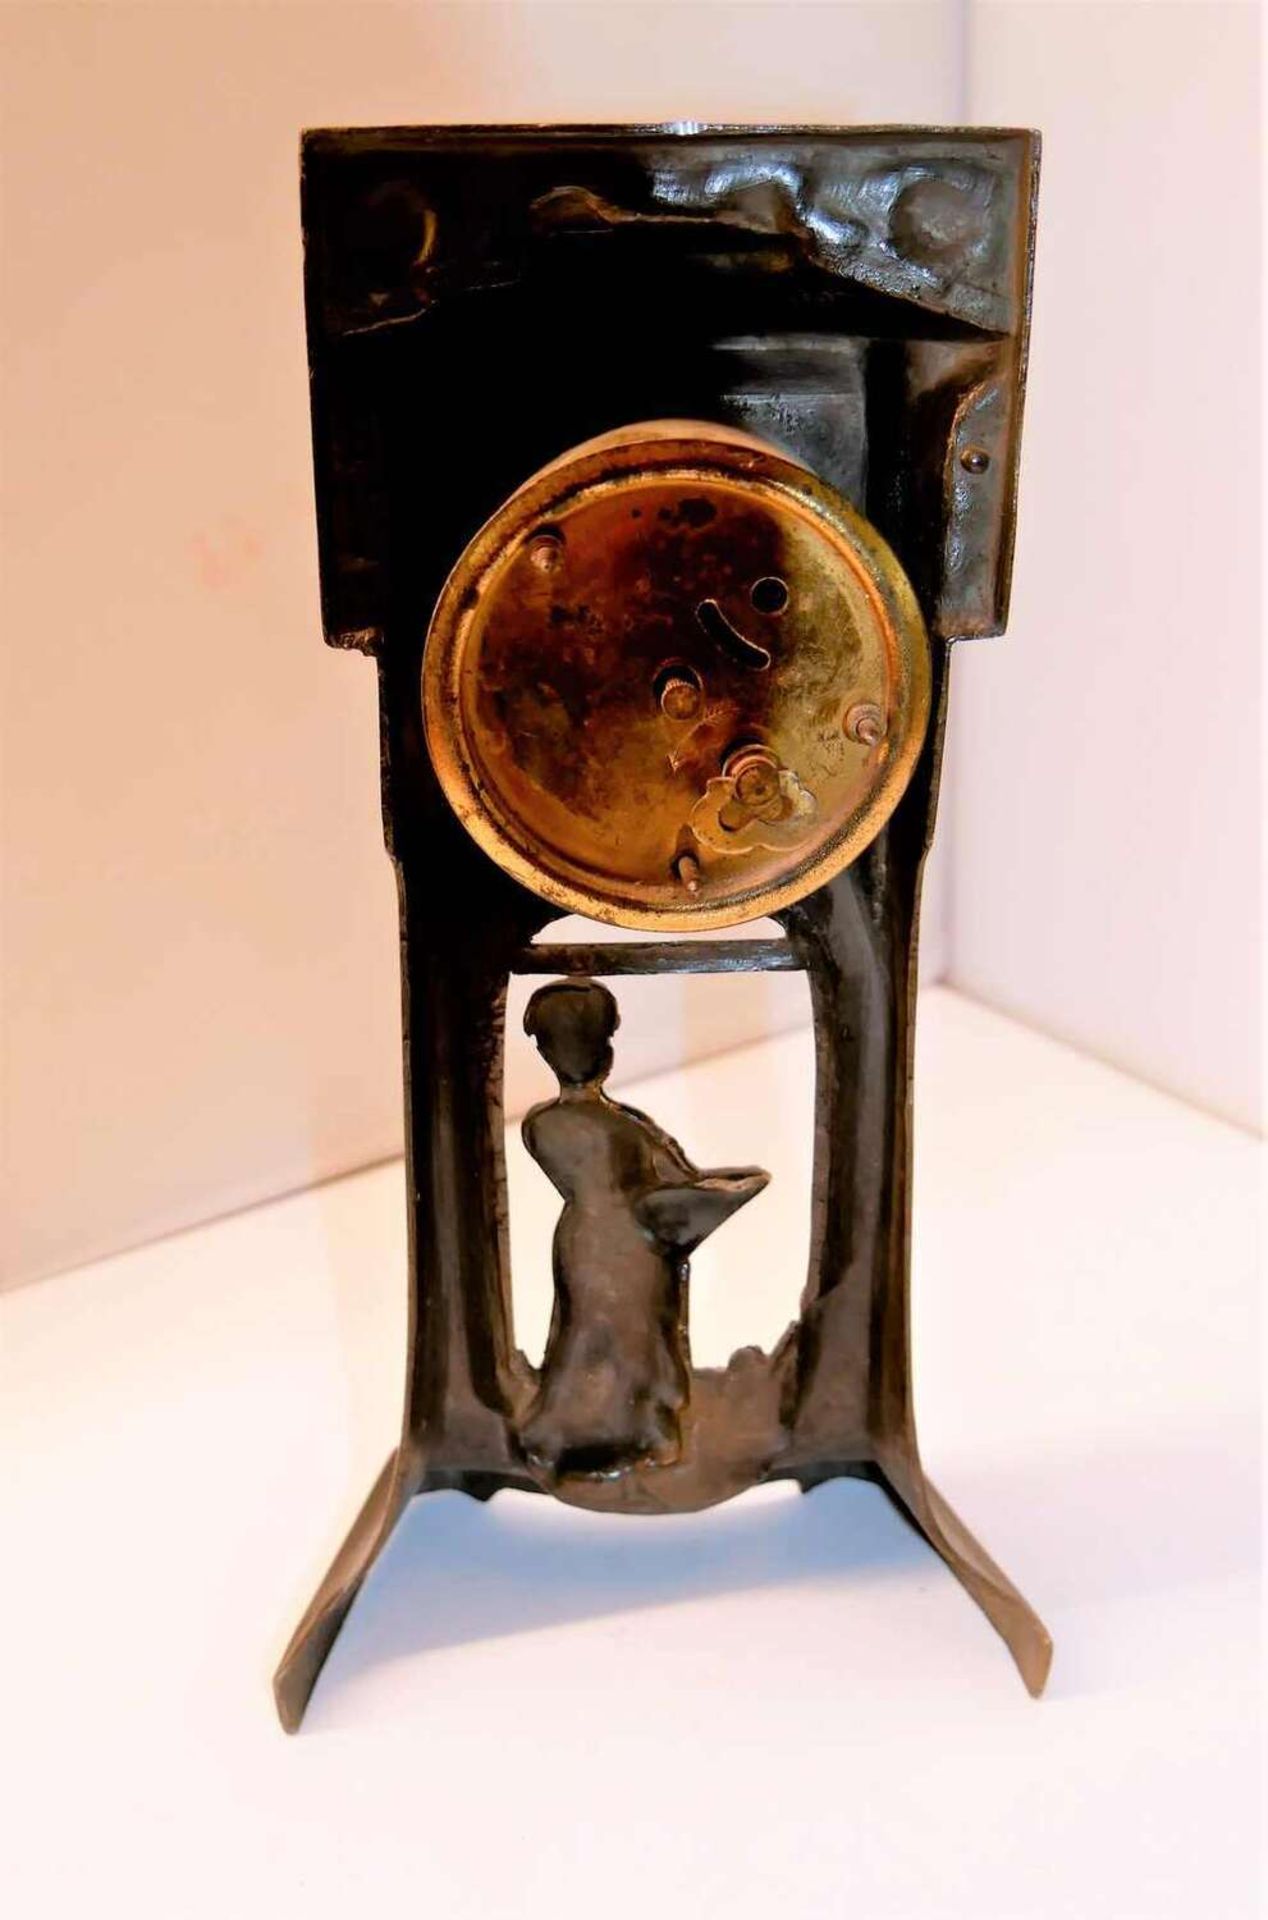 Kleine Jugendstil Tischuhr, Höhe ca. 24 cm. Gut erhaltender Zustand. Small Art Nouveau table clock, - Image 3 of 4